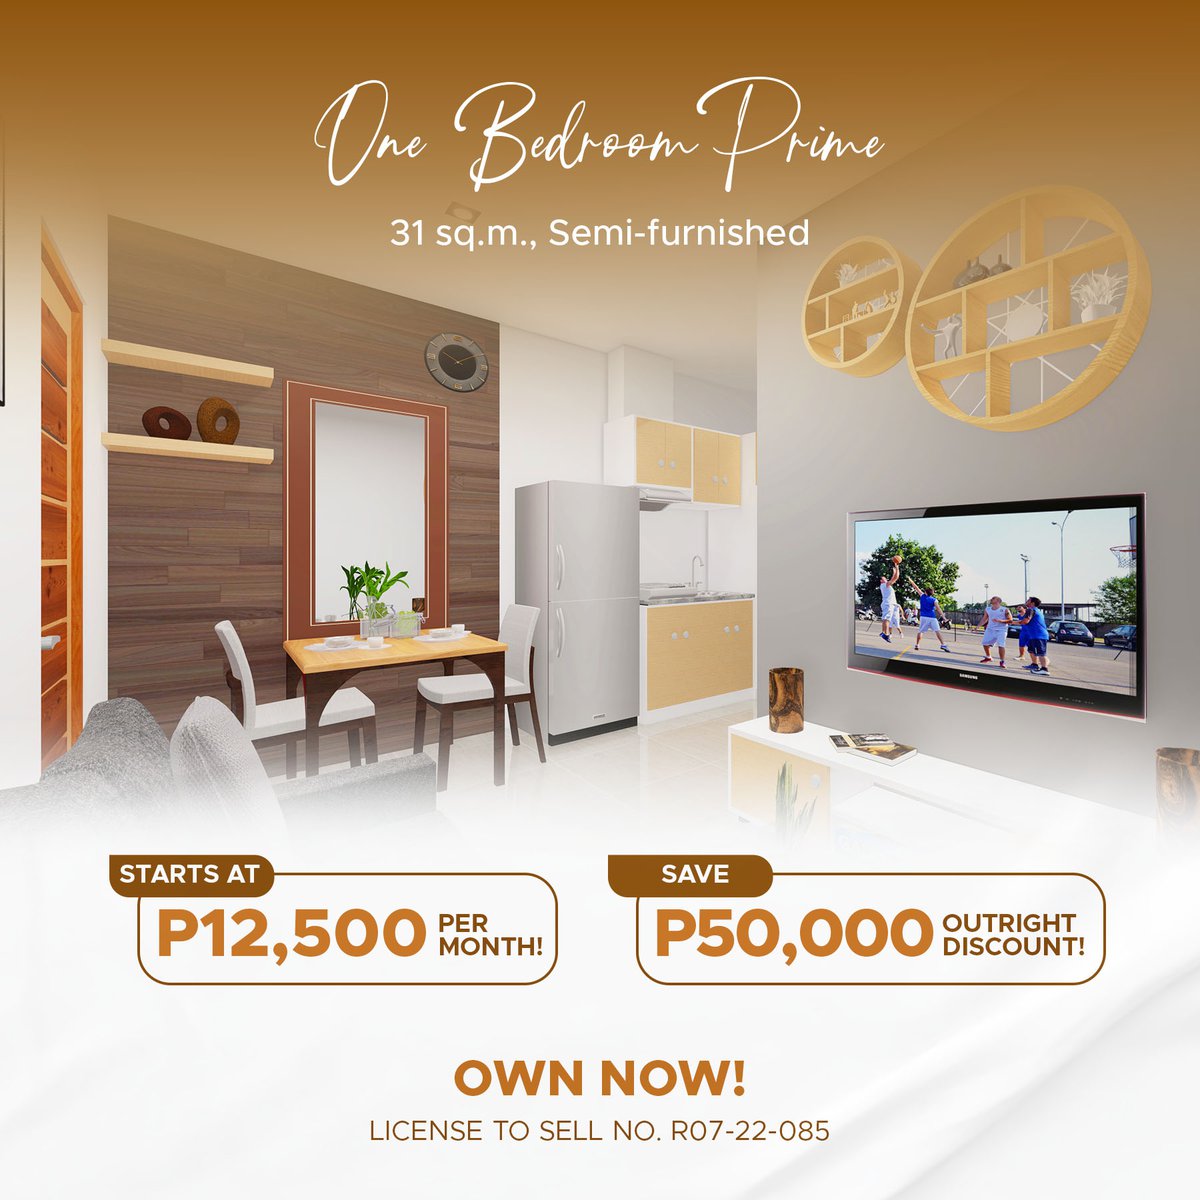 31.00 sqm 1-bedroom Condo For Sale in Panglao Bohol